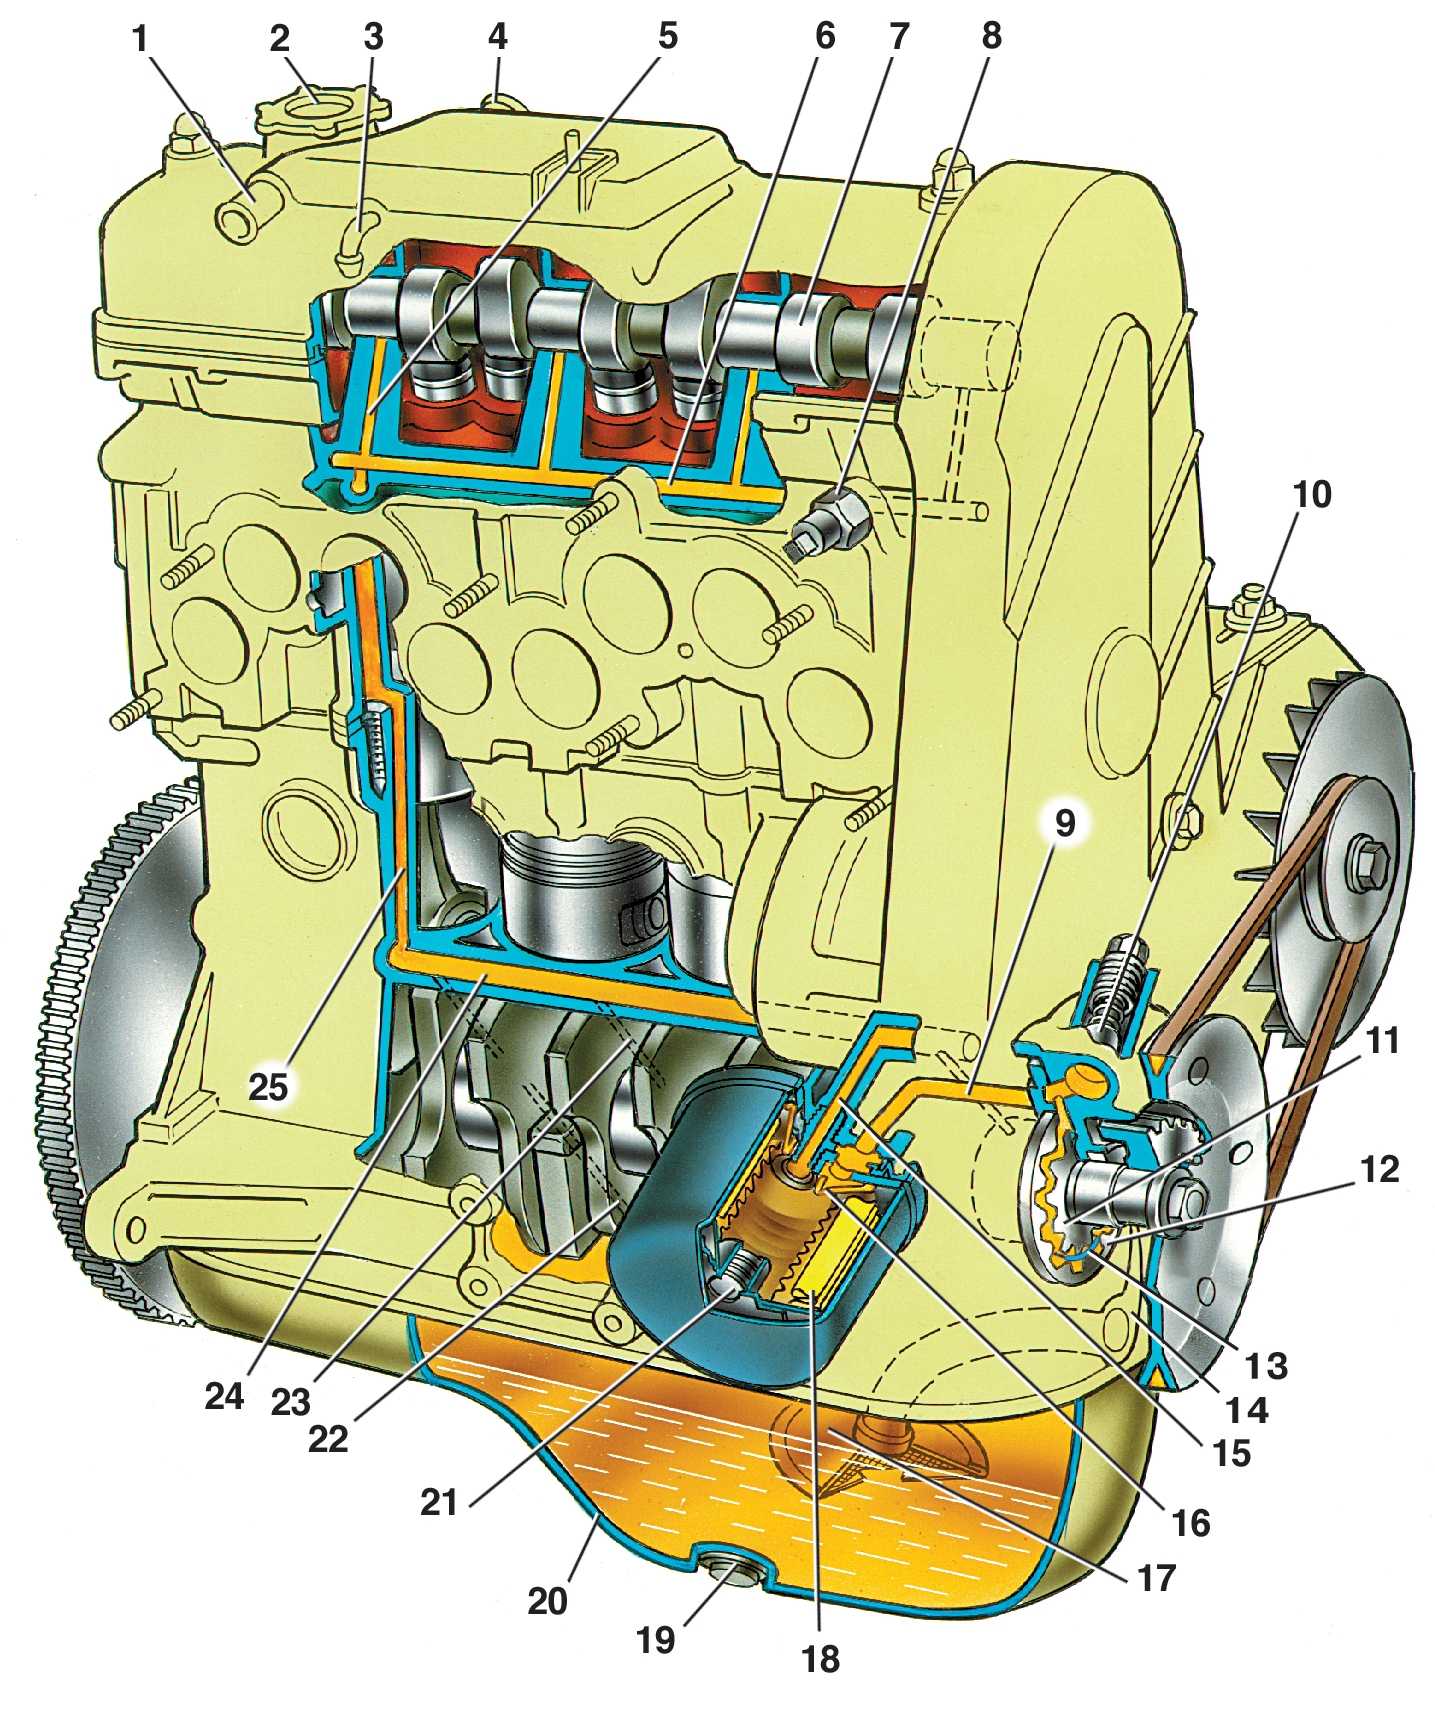 Технические характеристики двигателя ваз 2114